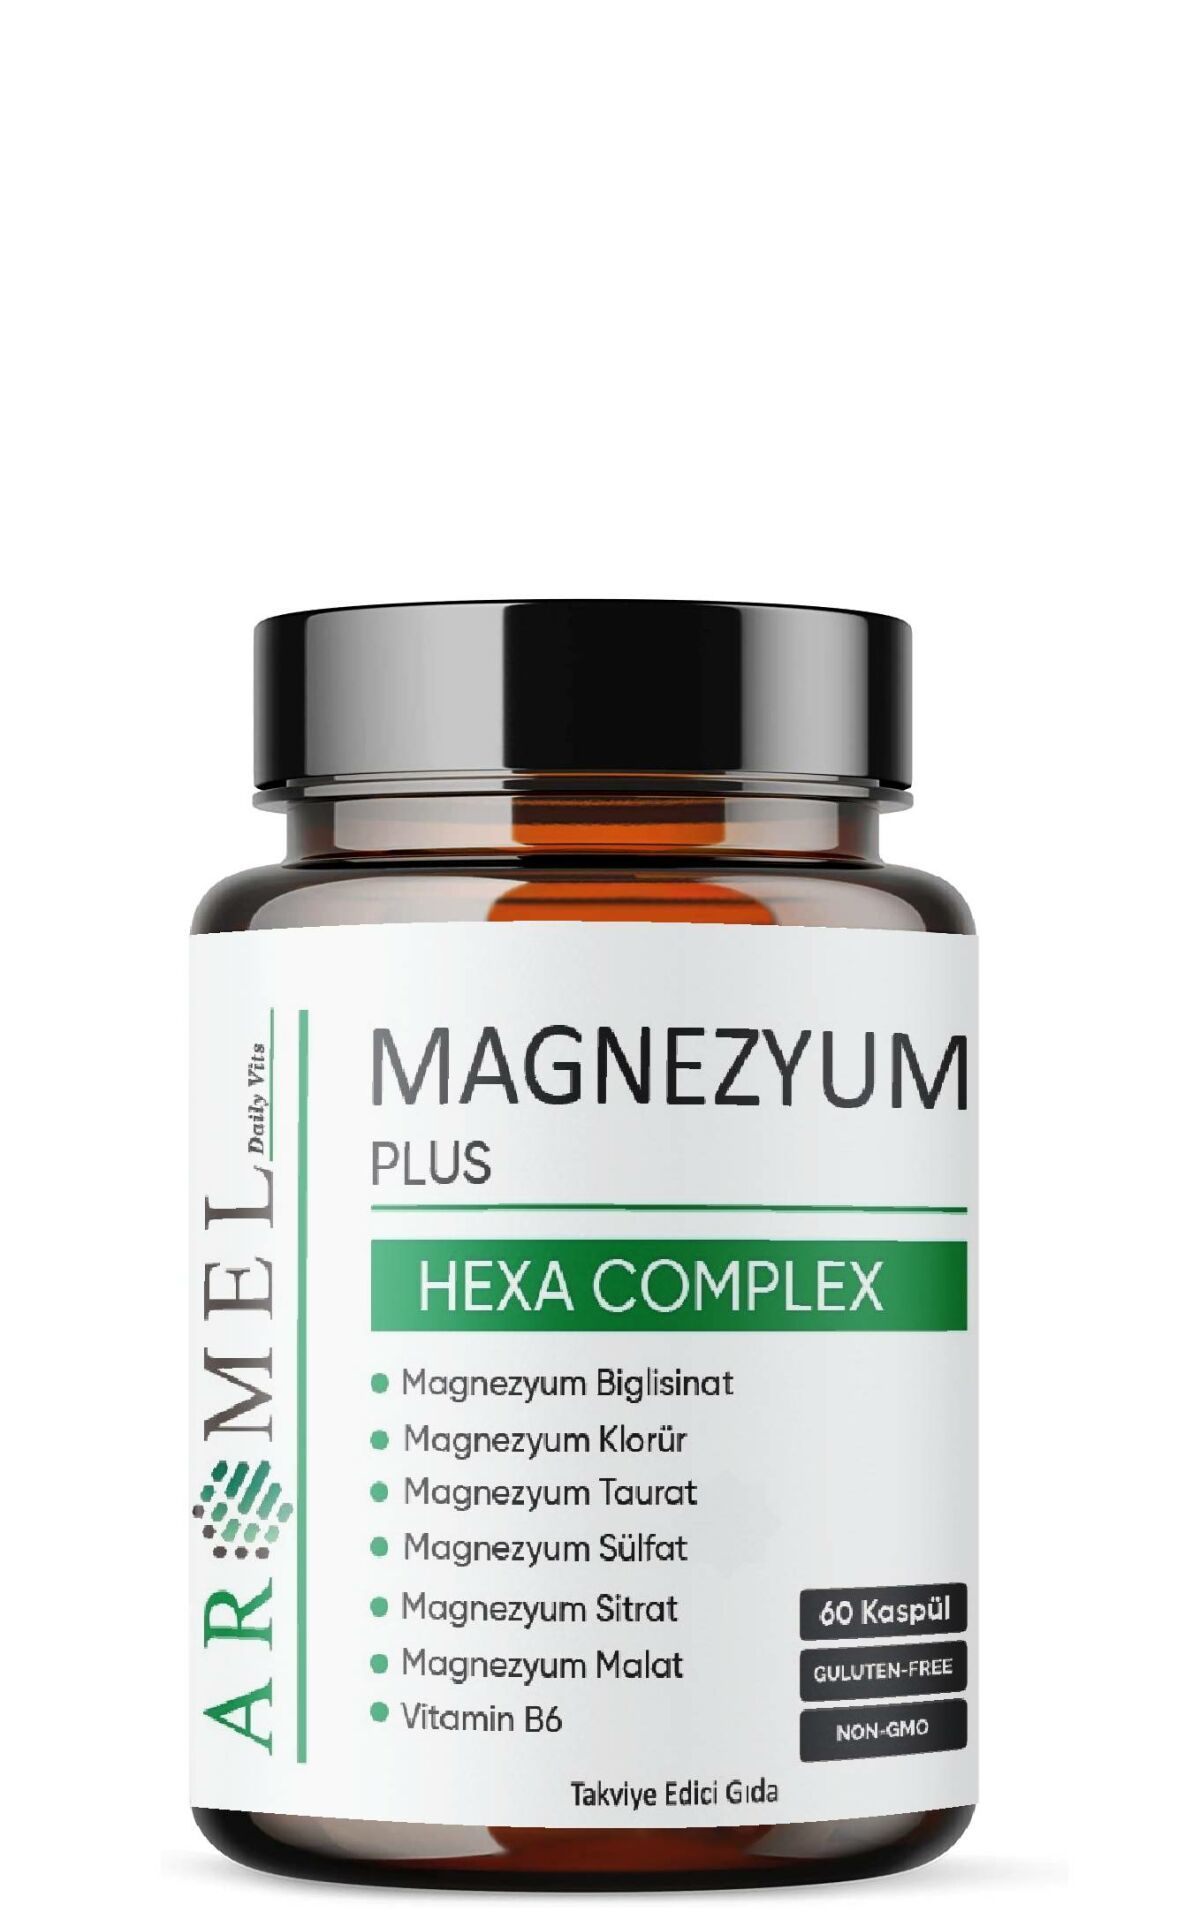 Aromel Magnezyum Plus, Hexa Complex | 60 Kapsül | Magnezyum,Biglisinat,Klorür,Taurat,Sülfat,Sitrat,Malat